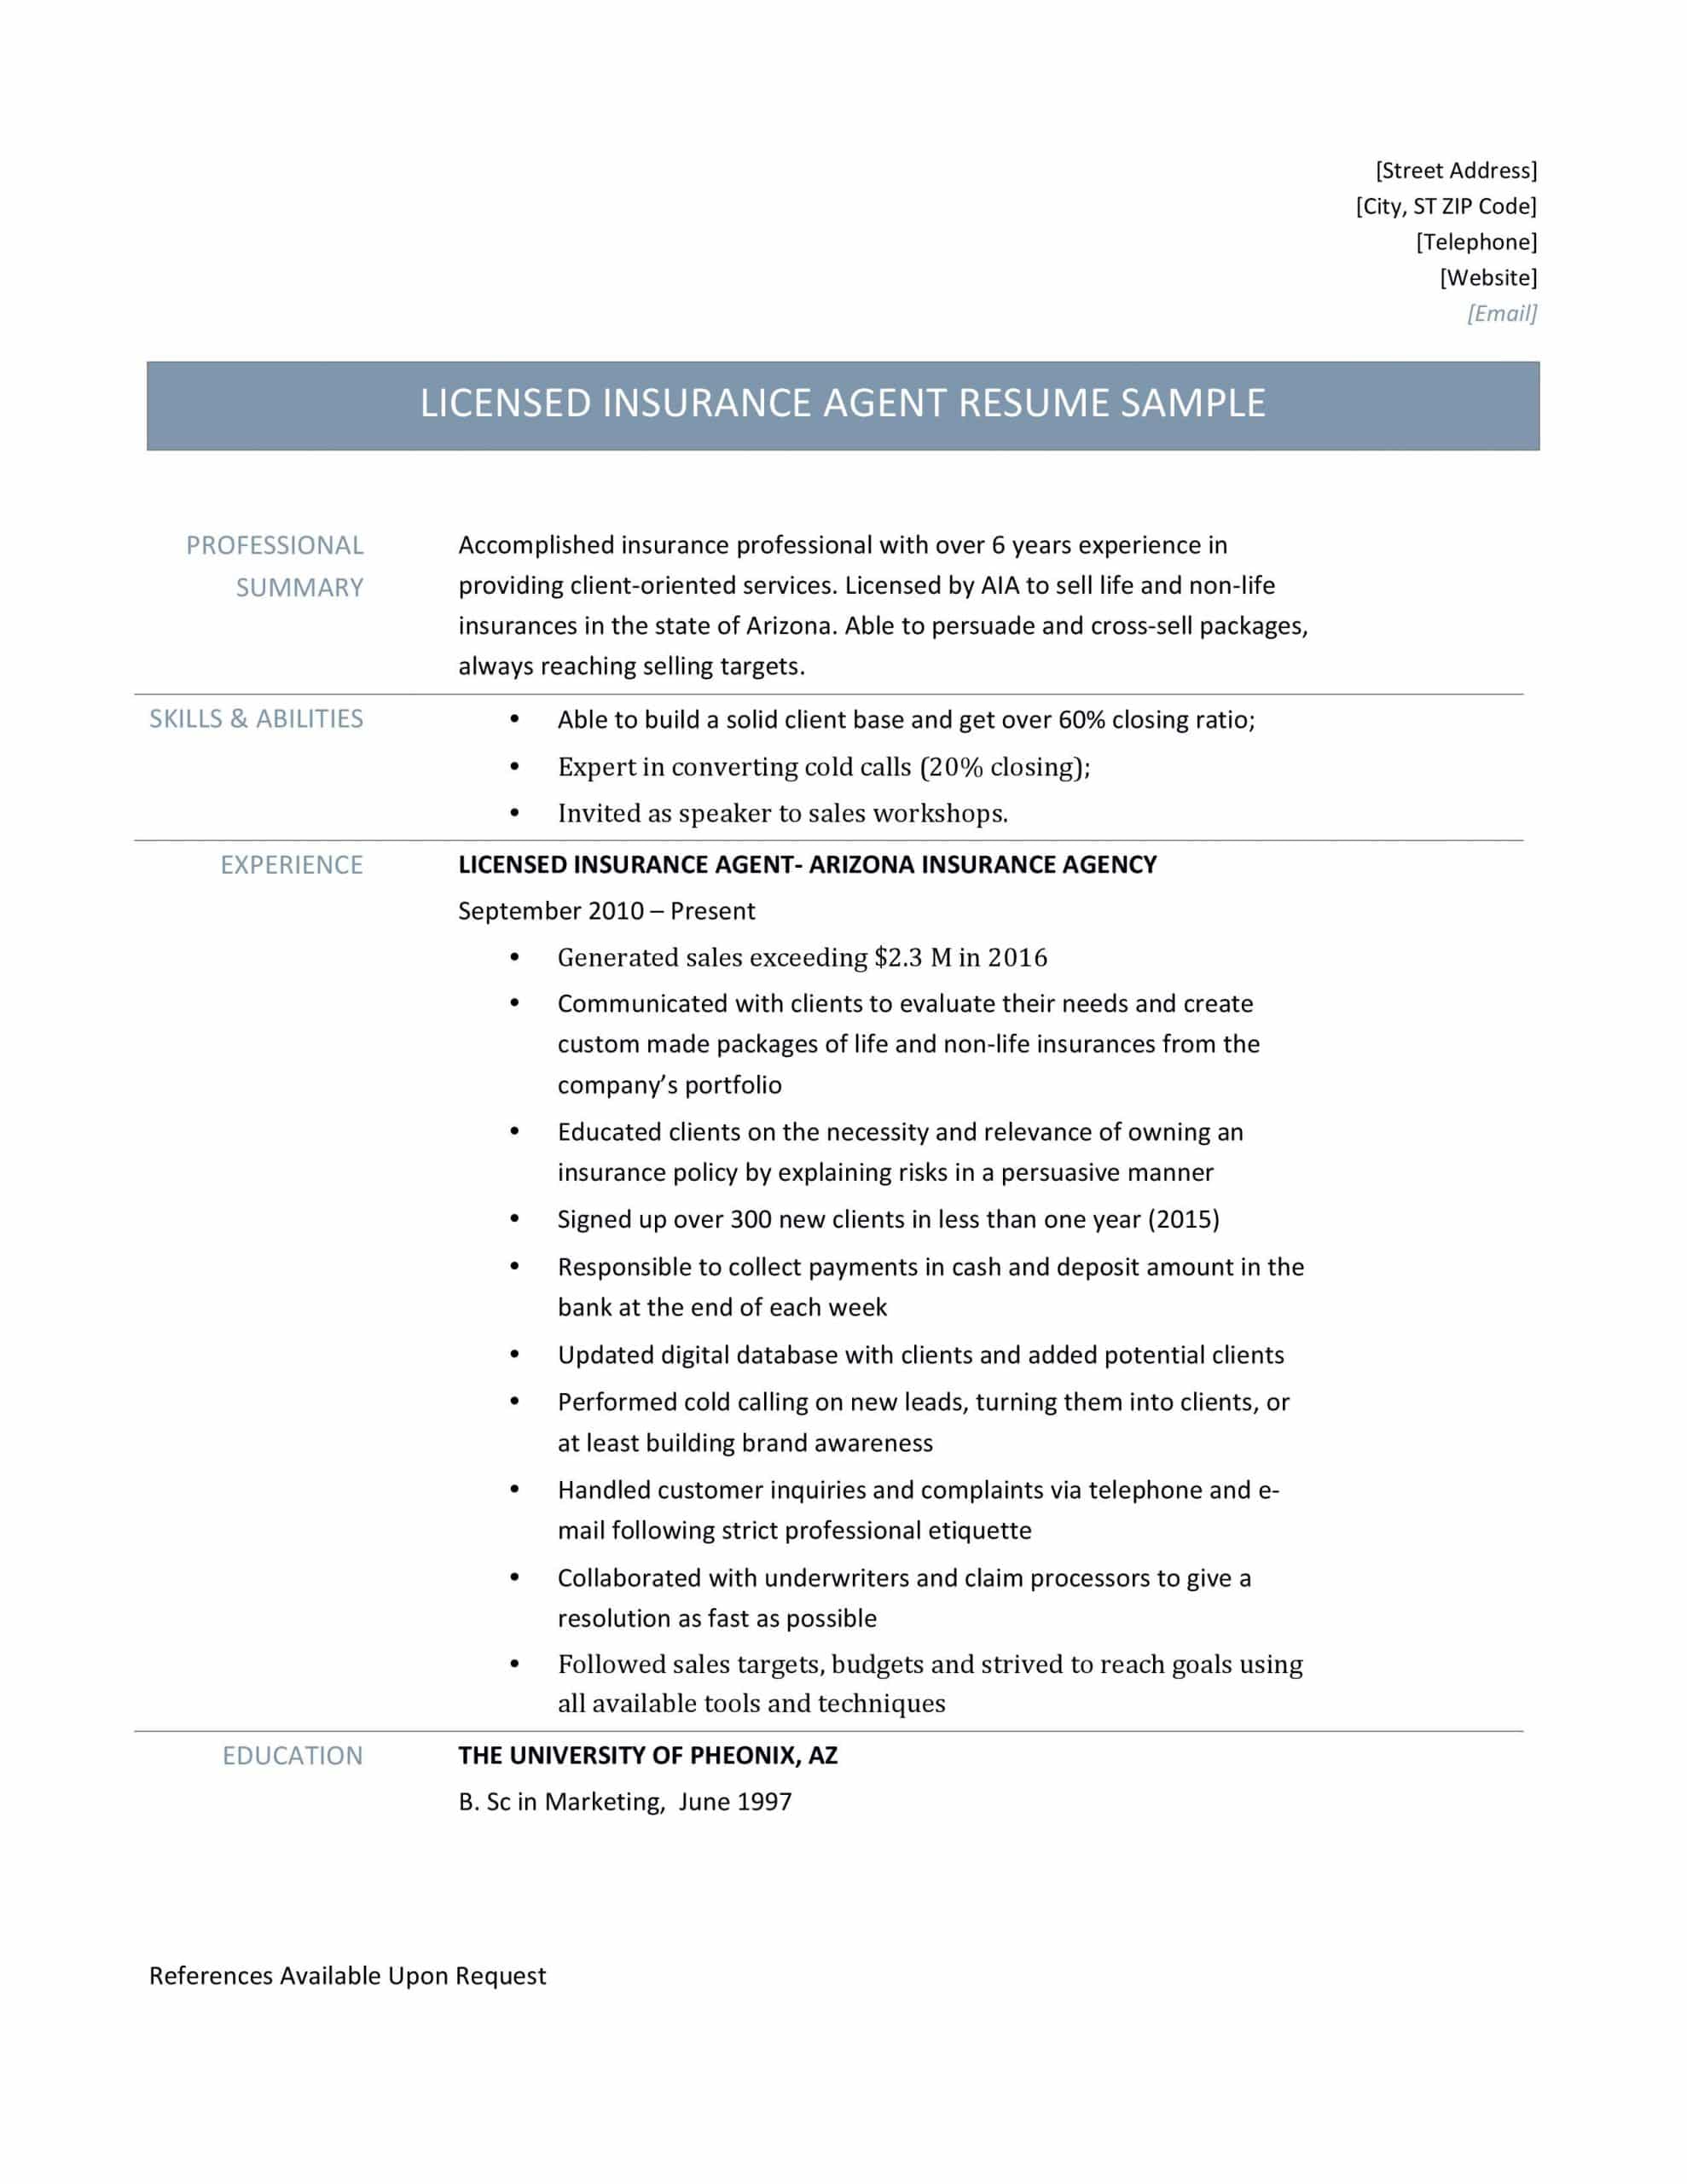 Licensed Insurance Agent Resume Samples and Job Description